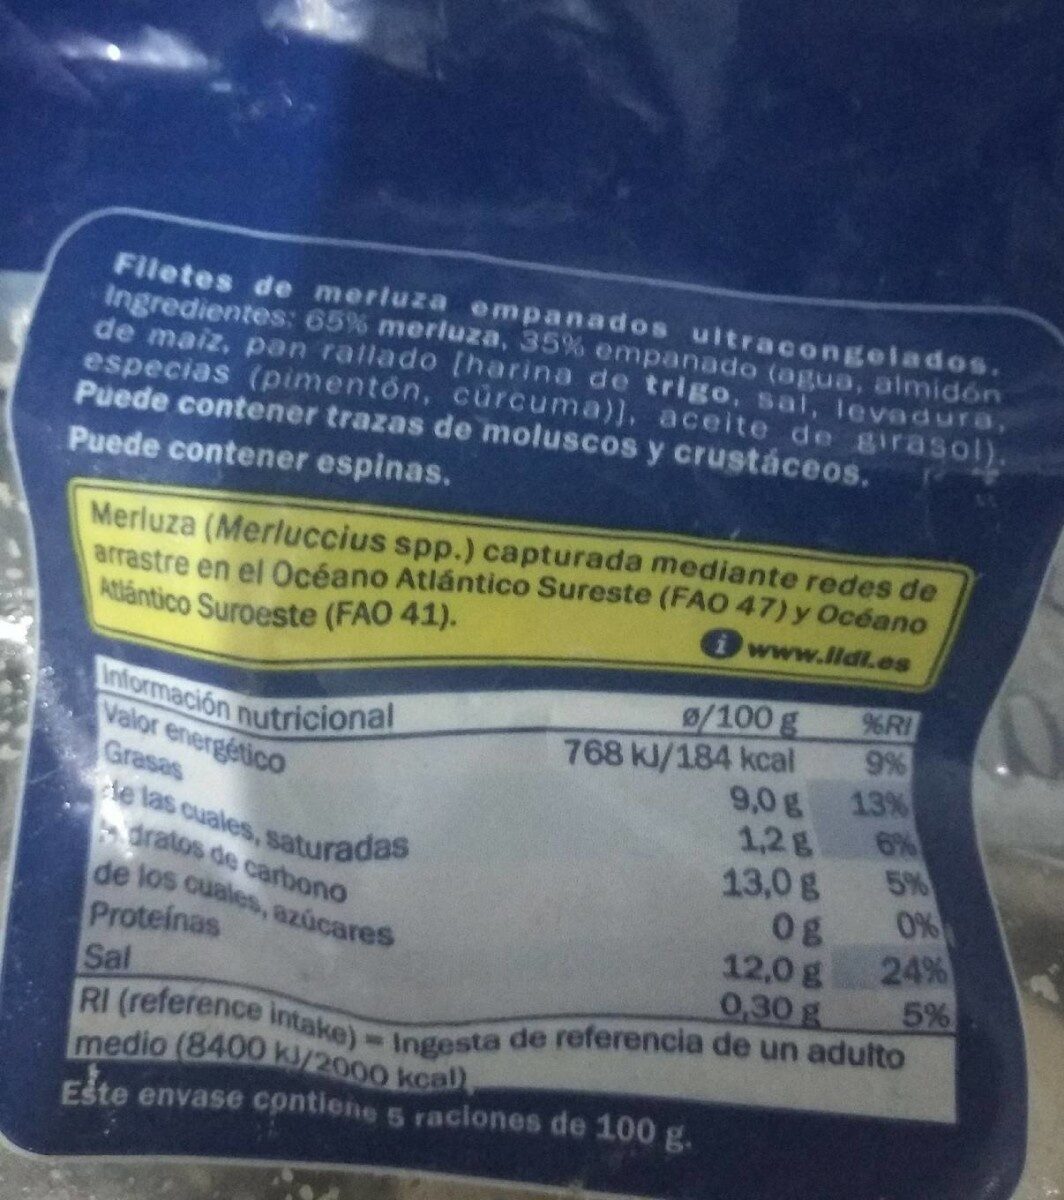 Filetes de merluza empanados - Informació nutricional - en